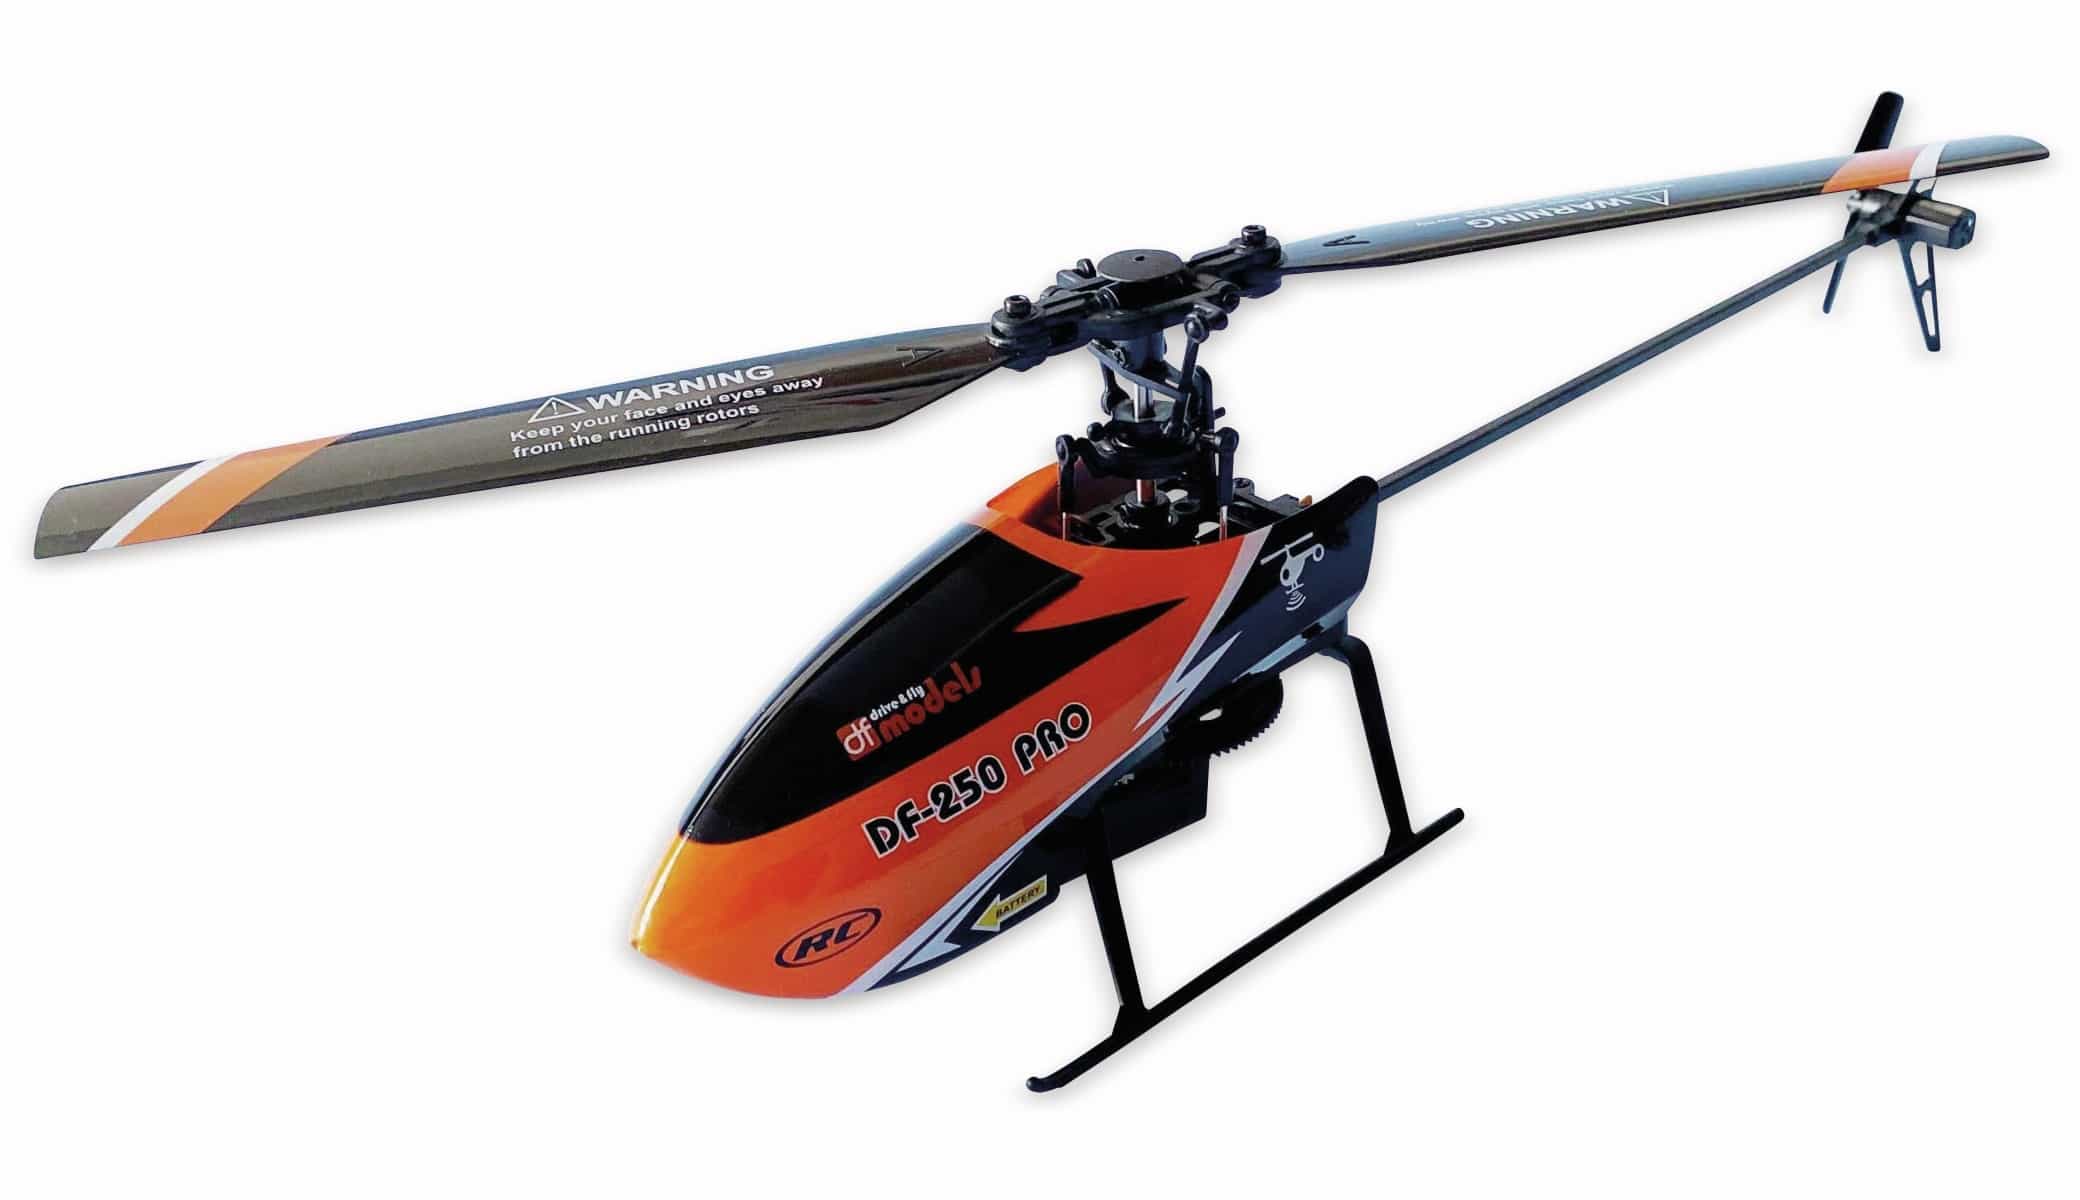 df models Helikopter DF-250 PRO, RTF